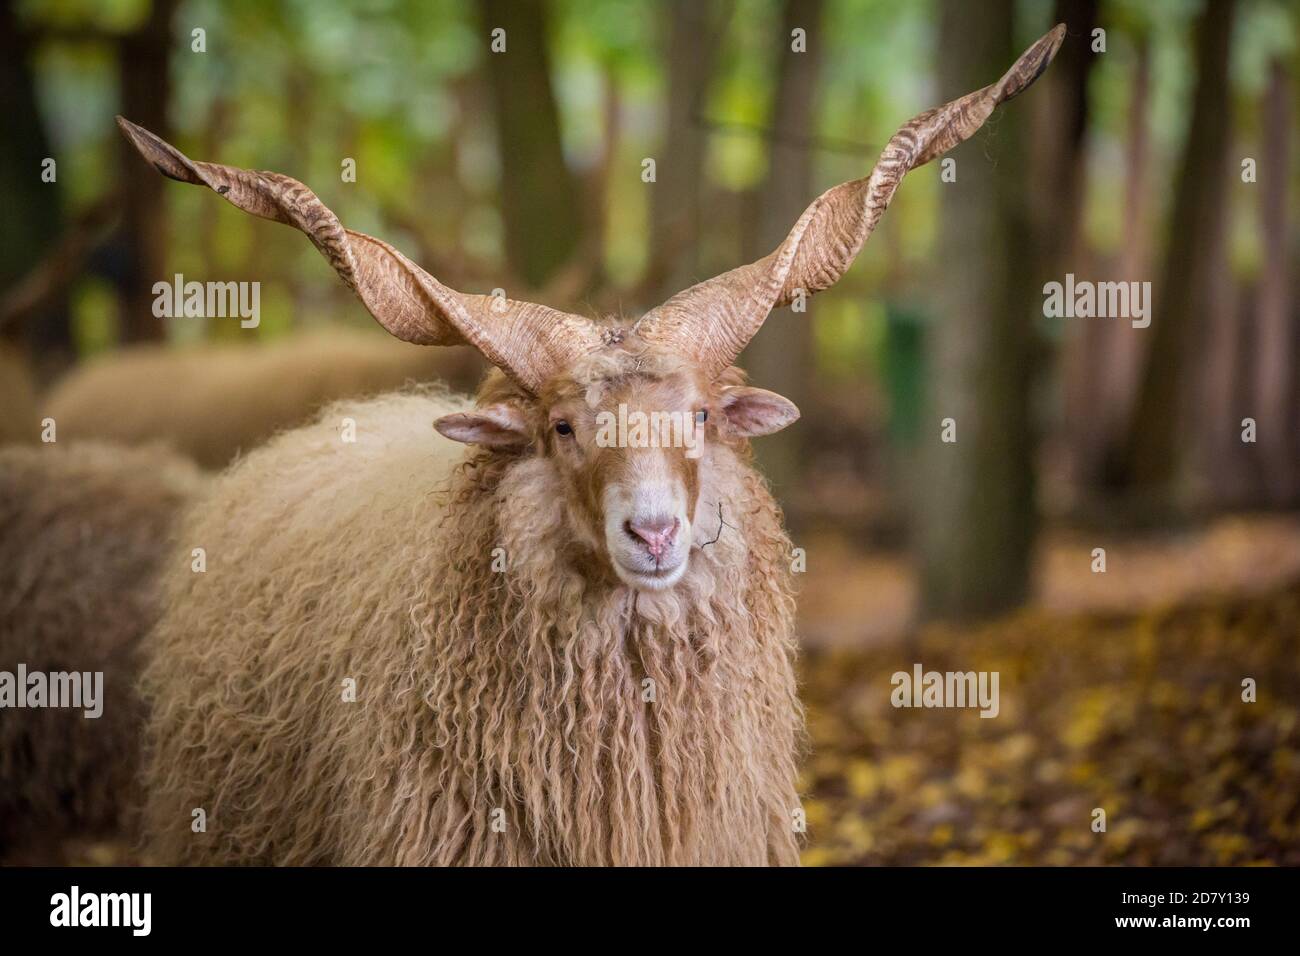 'Wallachian sheep' (Zackelshaf, Racka), an historic and endangered sheep breed from Hungary Stock Photo